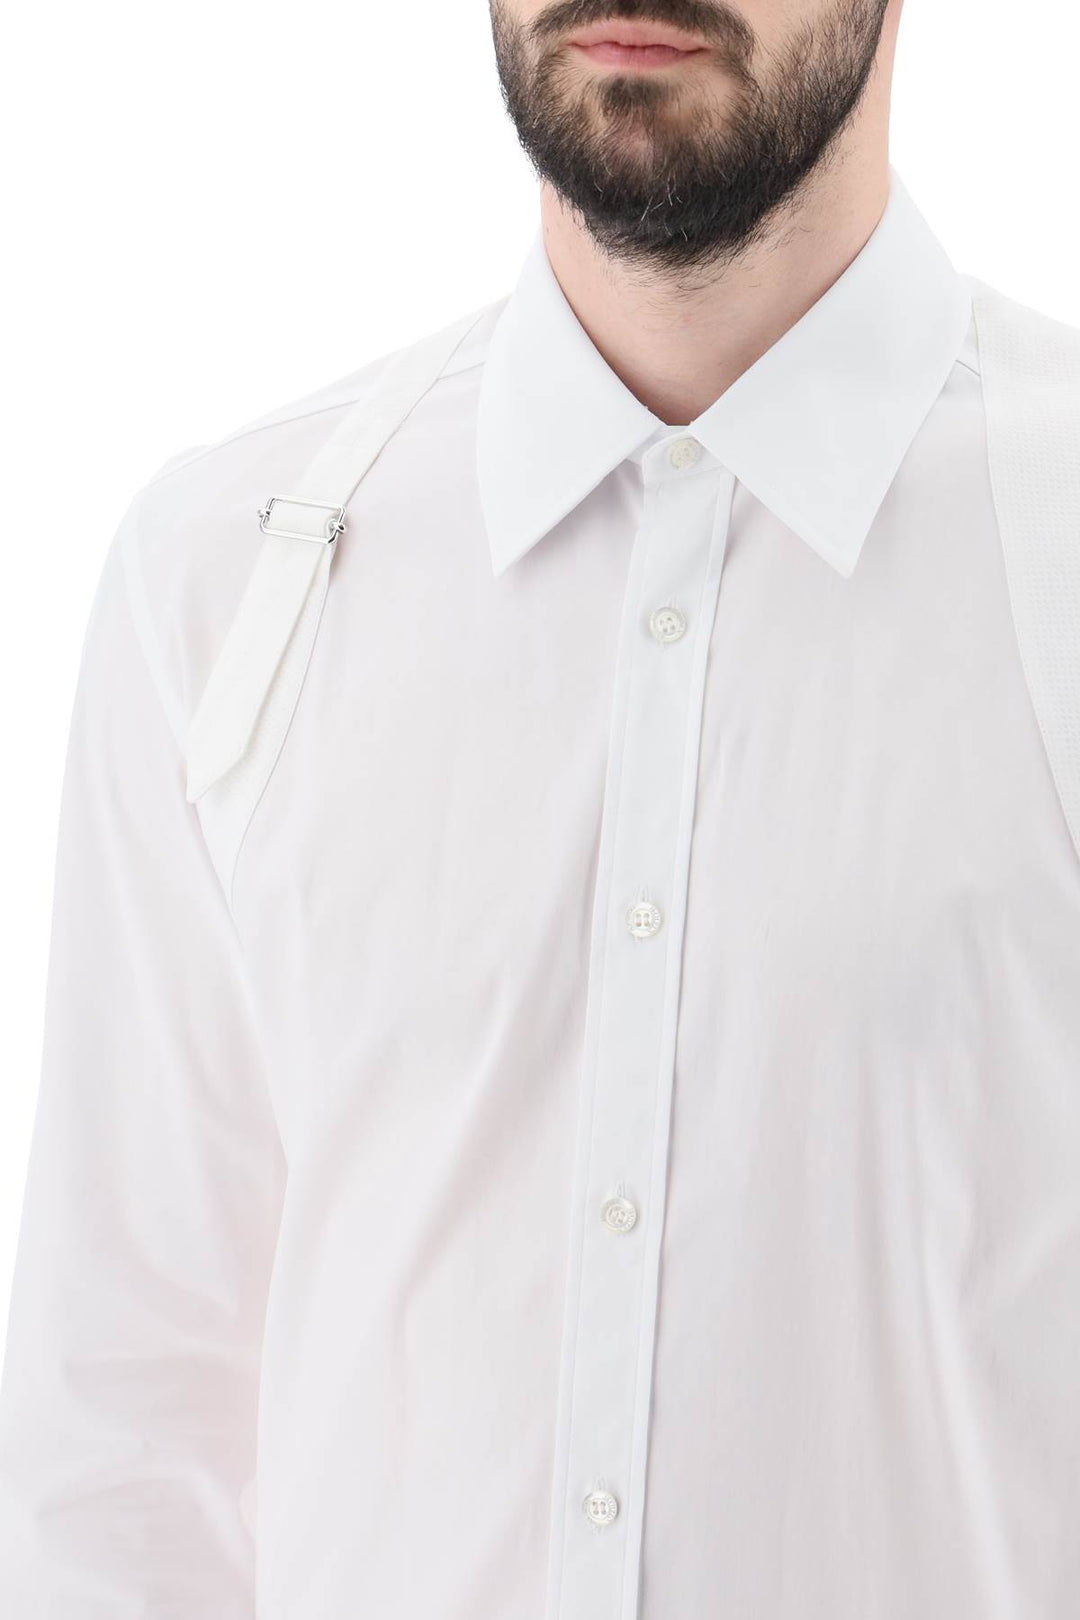 Alexander Mcqueen Stretch Cotton Harness Shirt   White